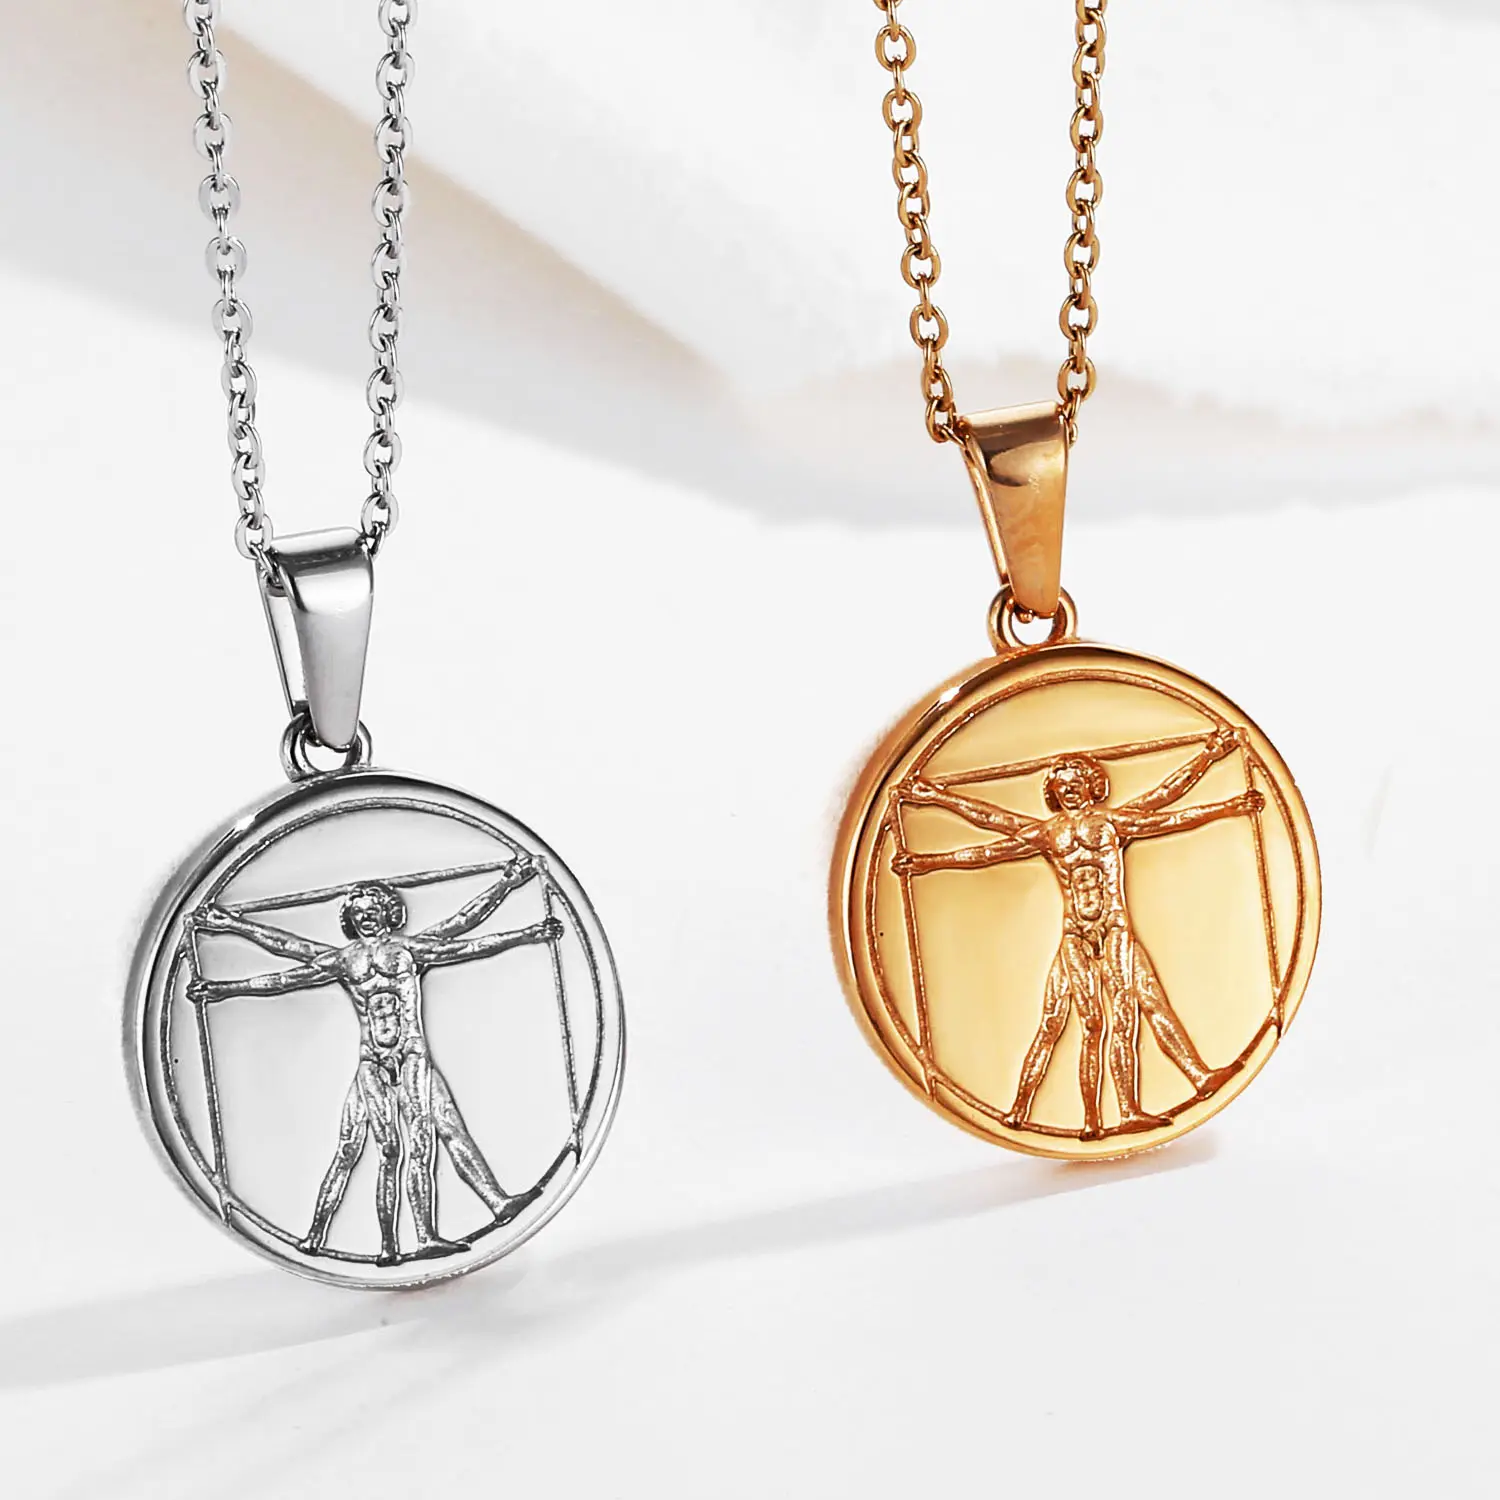 Nickel Free Stainless Steel Da Vinci Roman Human Necklace With Pendant 18k Gold Mythology Jewelry Vitruvian Man Pendant Necklace